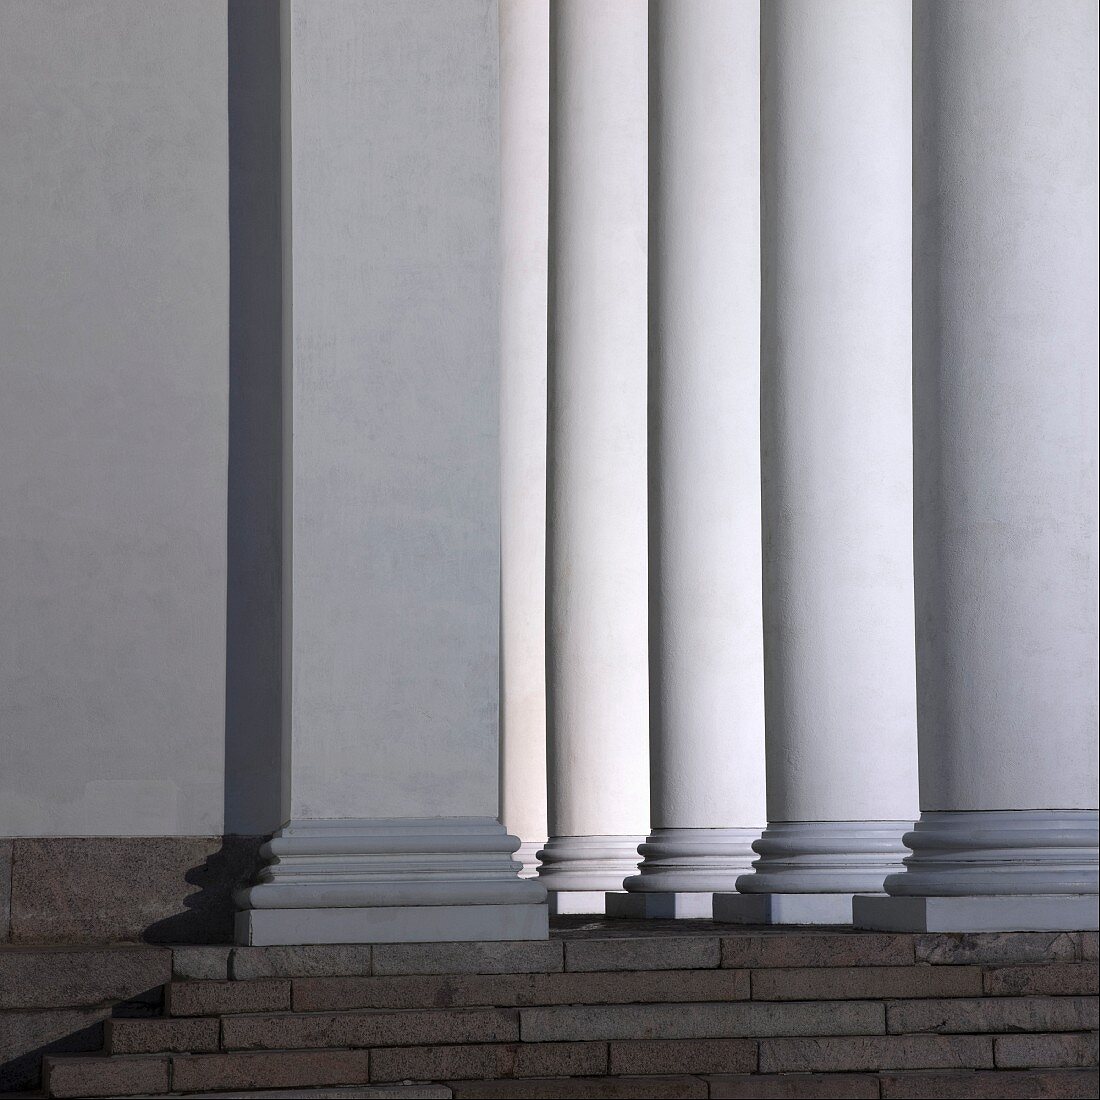 Columns outside a church (Helsinki)